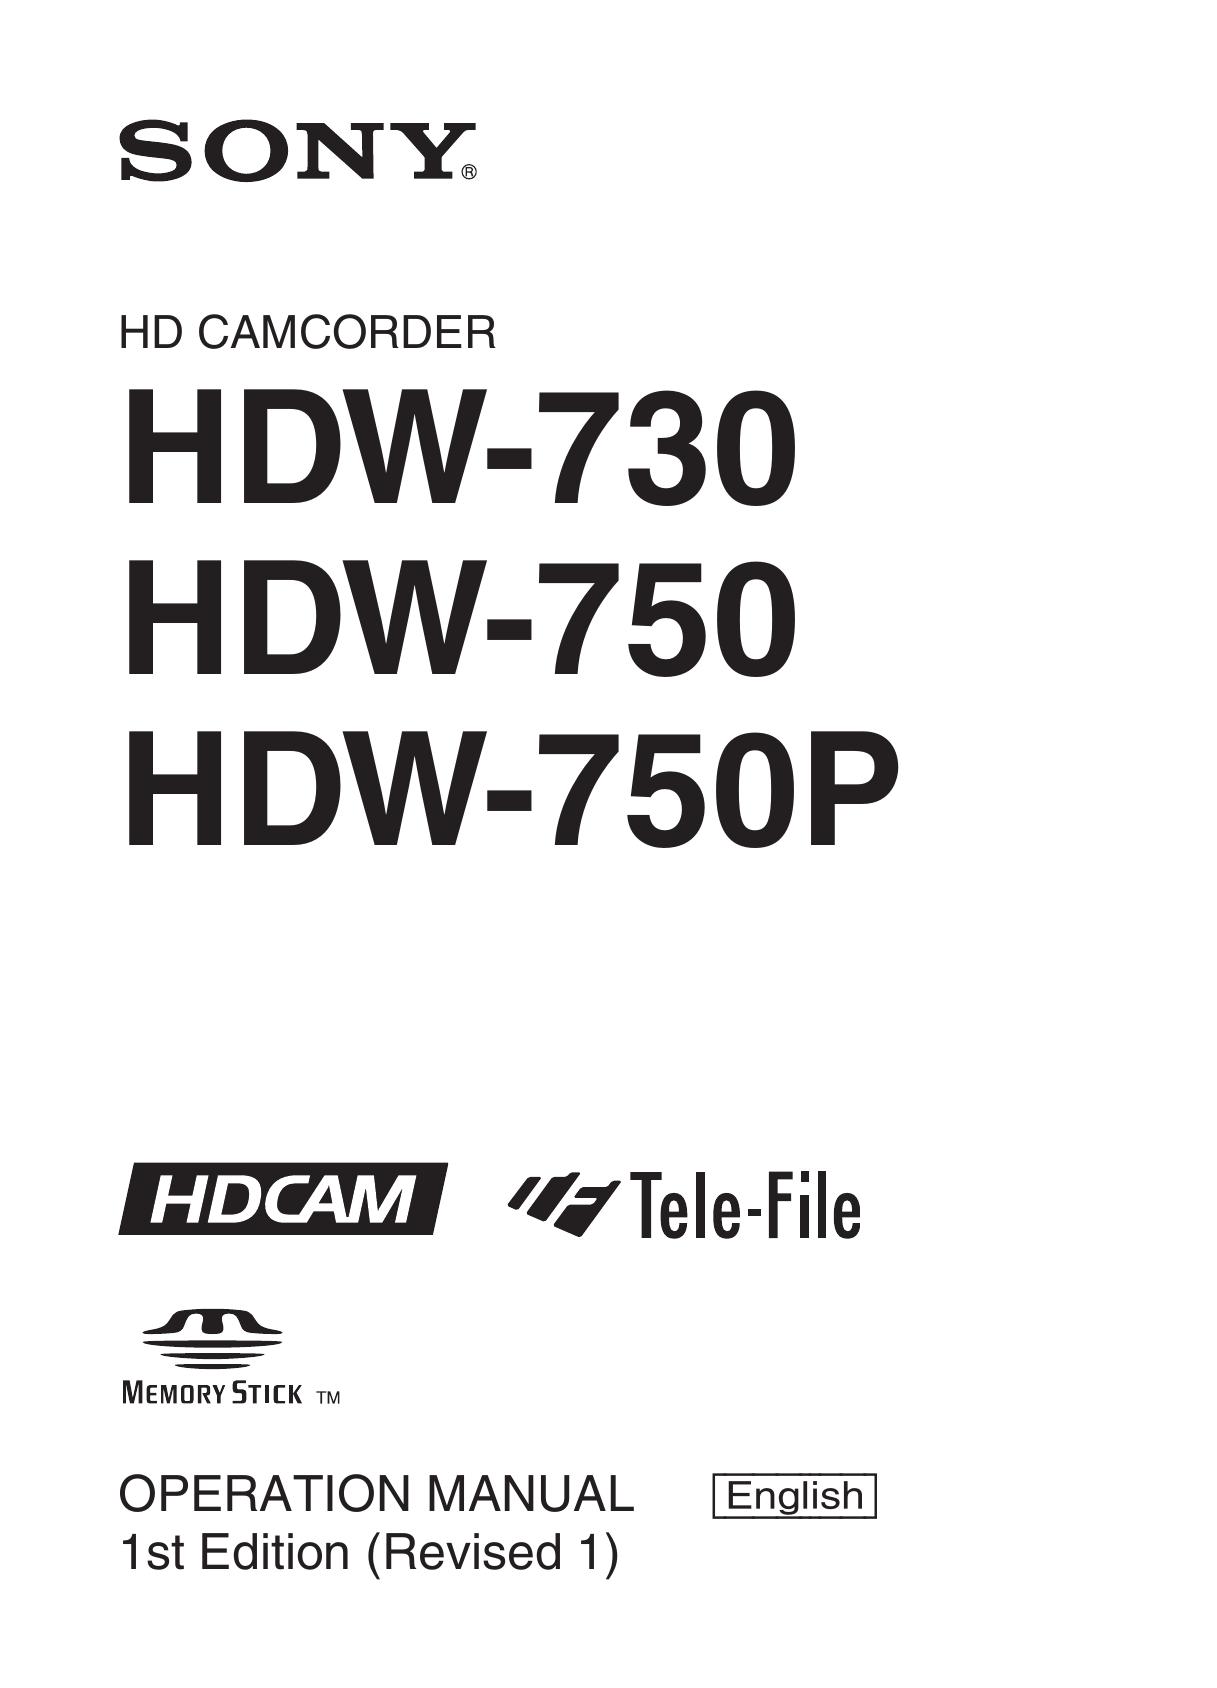 Yamaha HDW-750 Camcorder User Manual